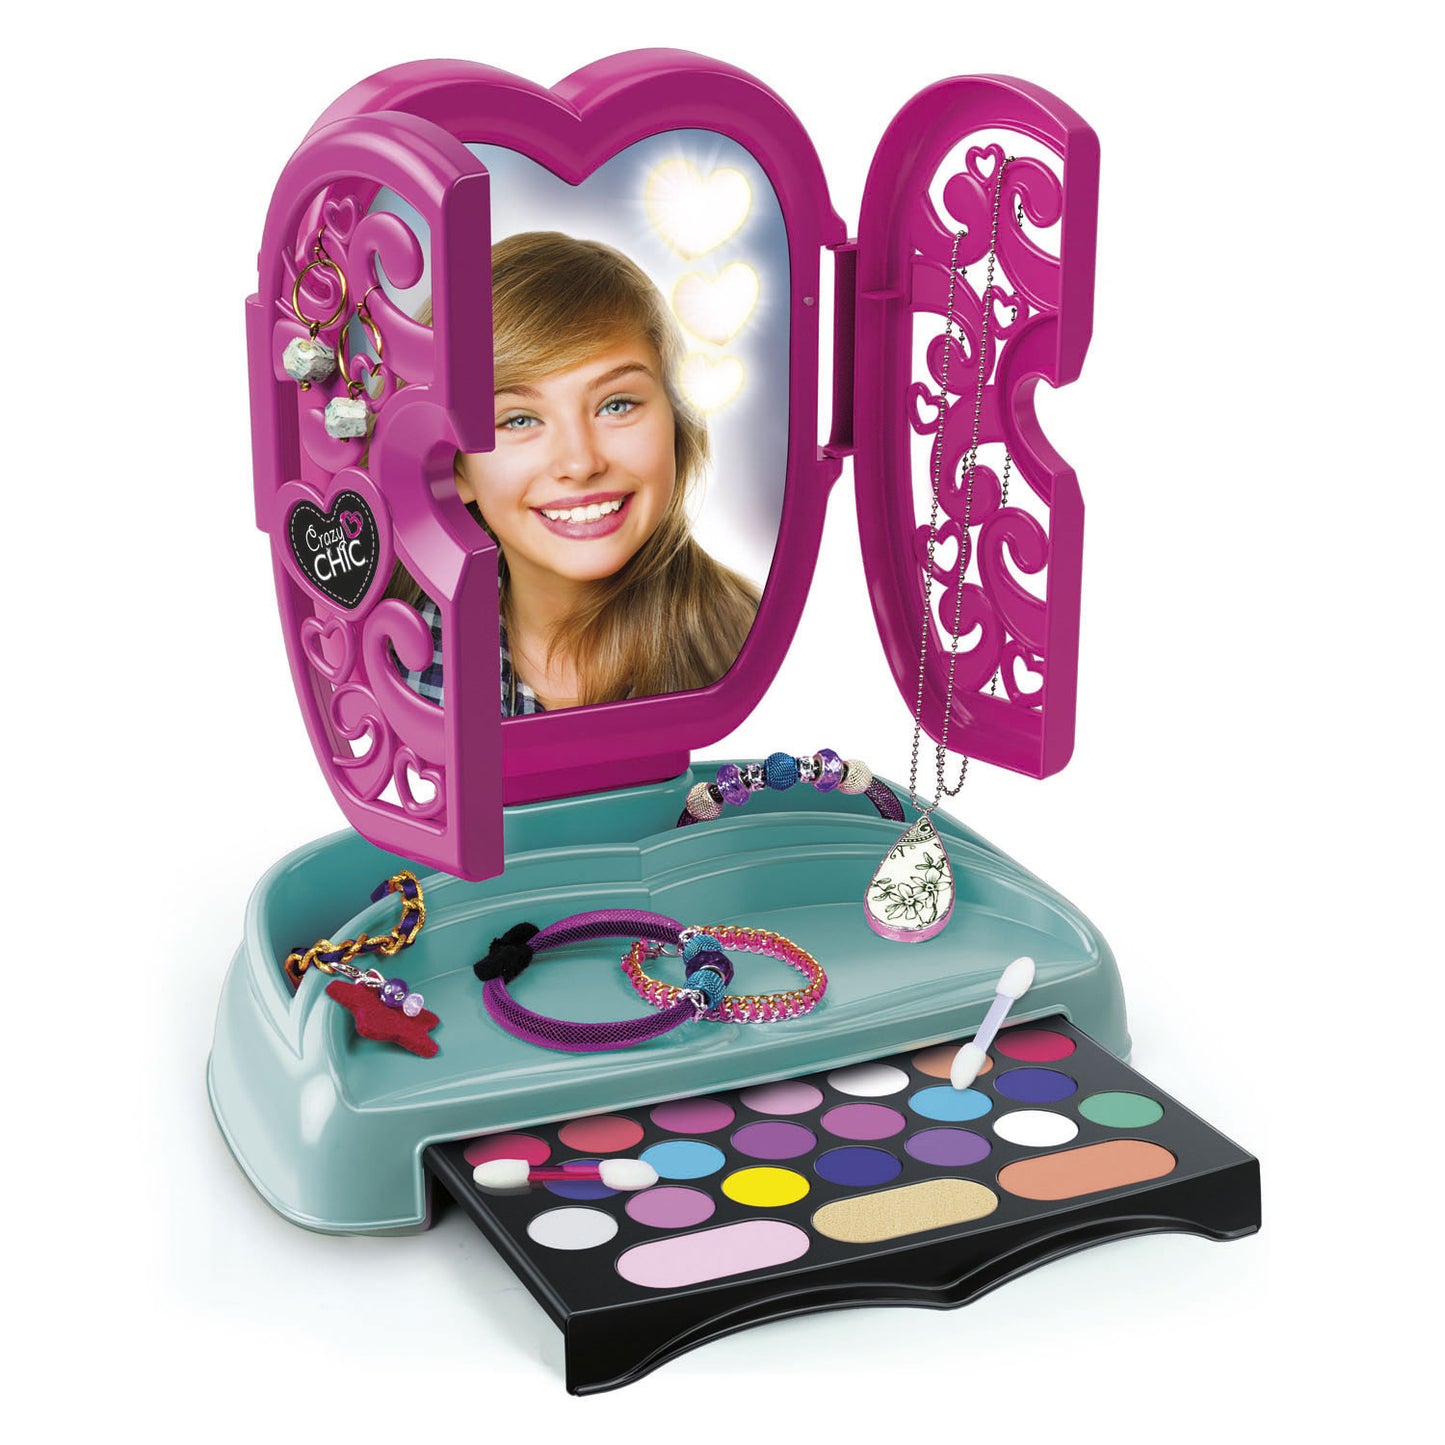 Clementoni Crazy Chic Makeup Mirror